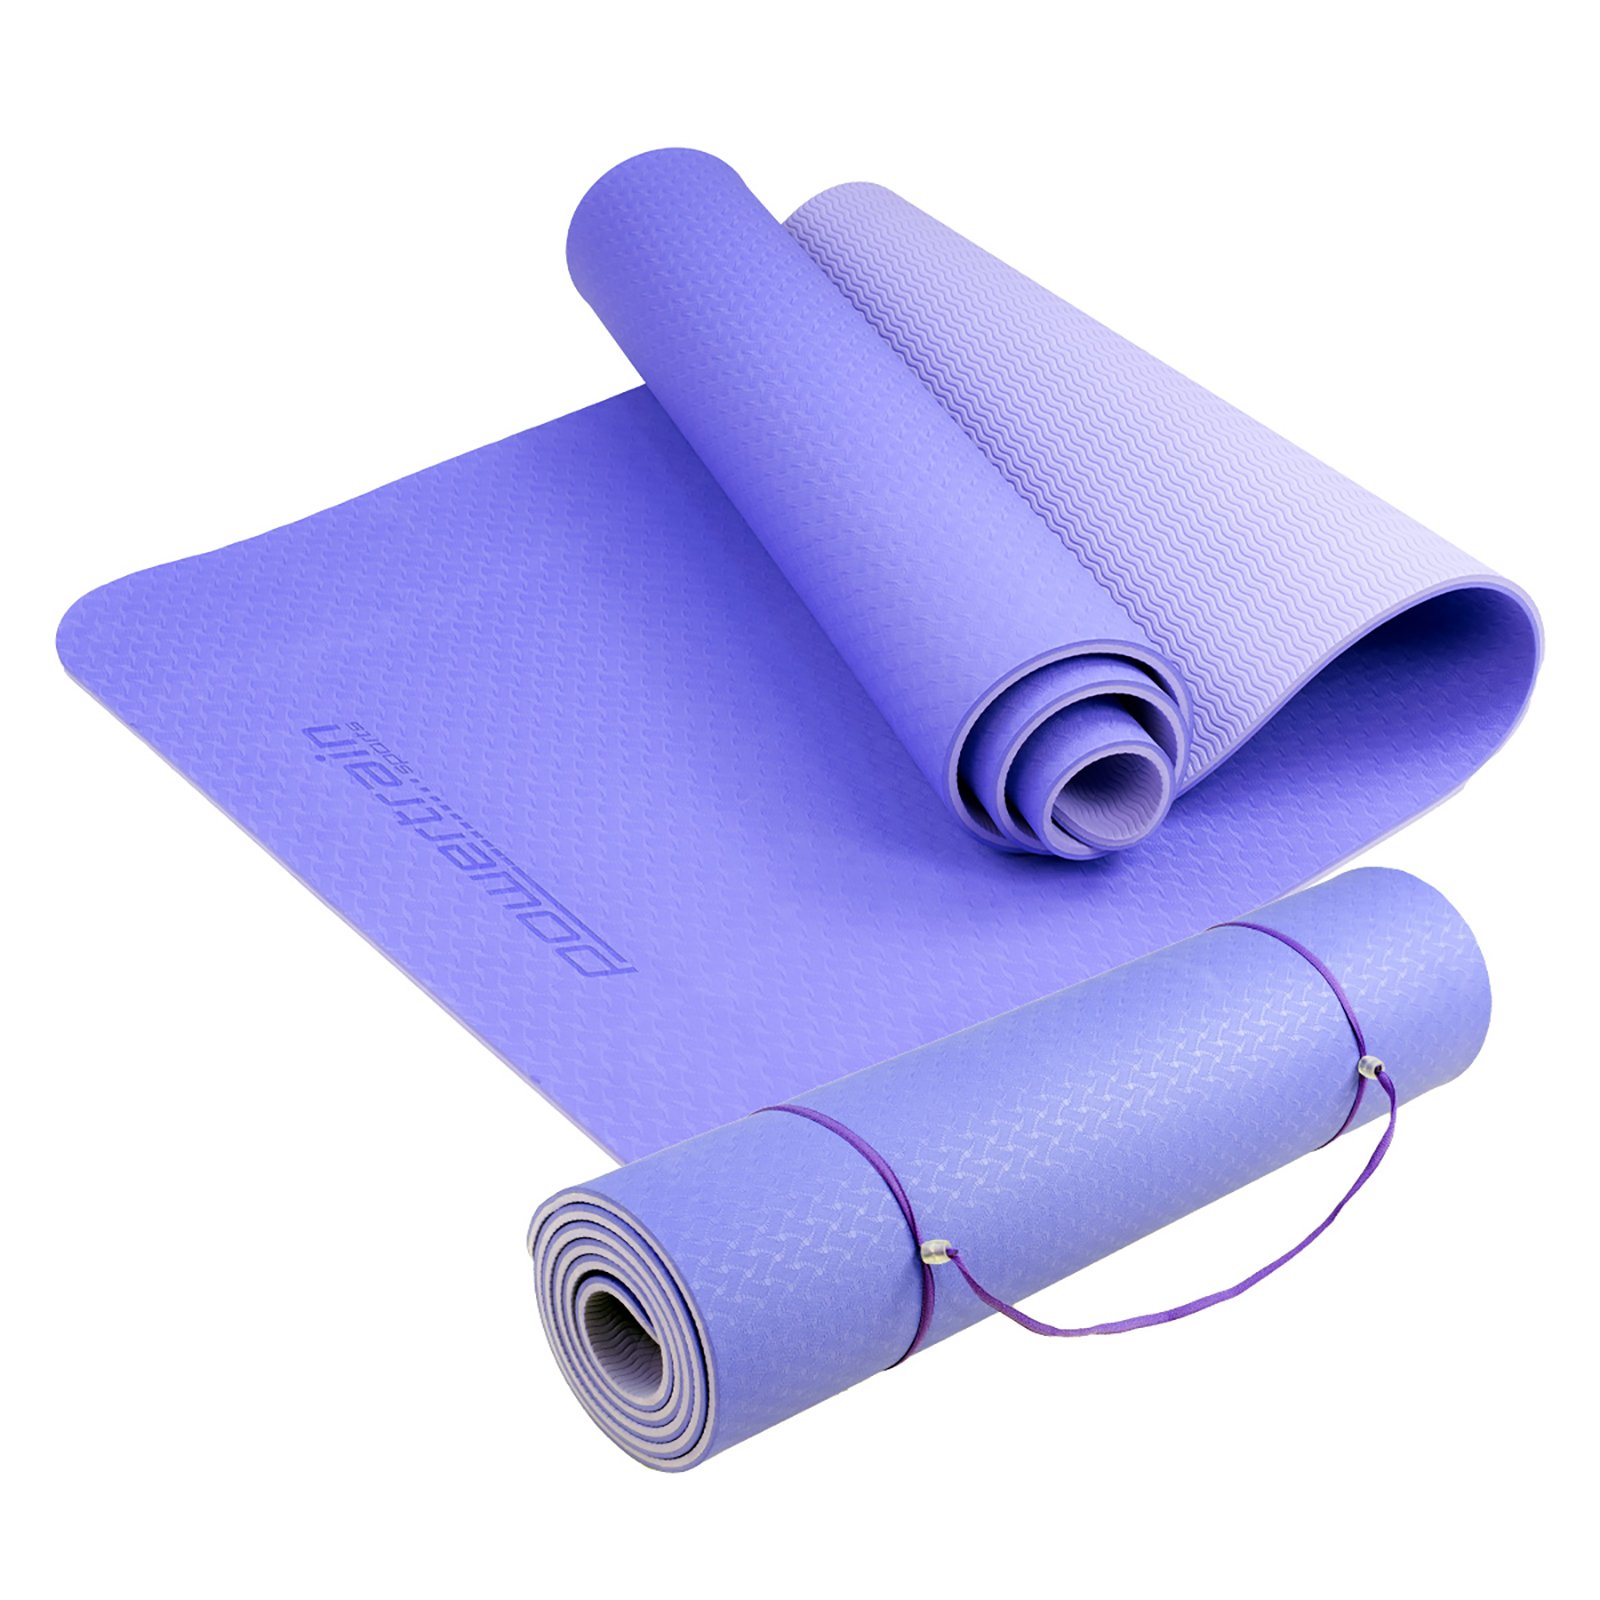 Powertrain Eco-Friendly TPE Pilates Exercise Yoga Mat 8mm - Light Purple 1